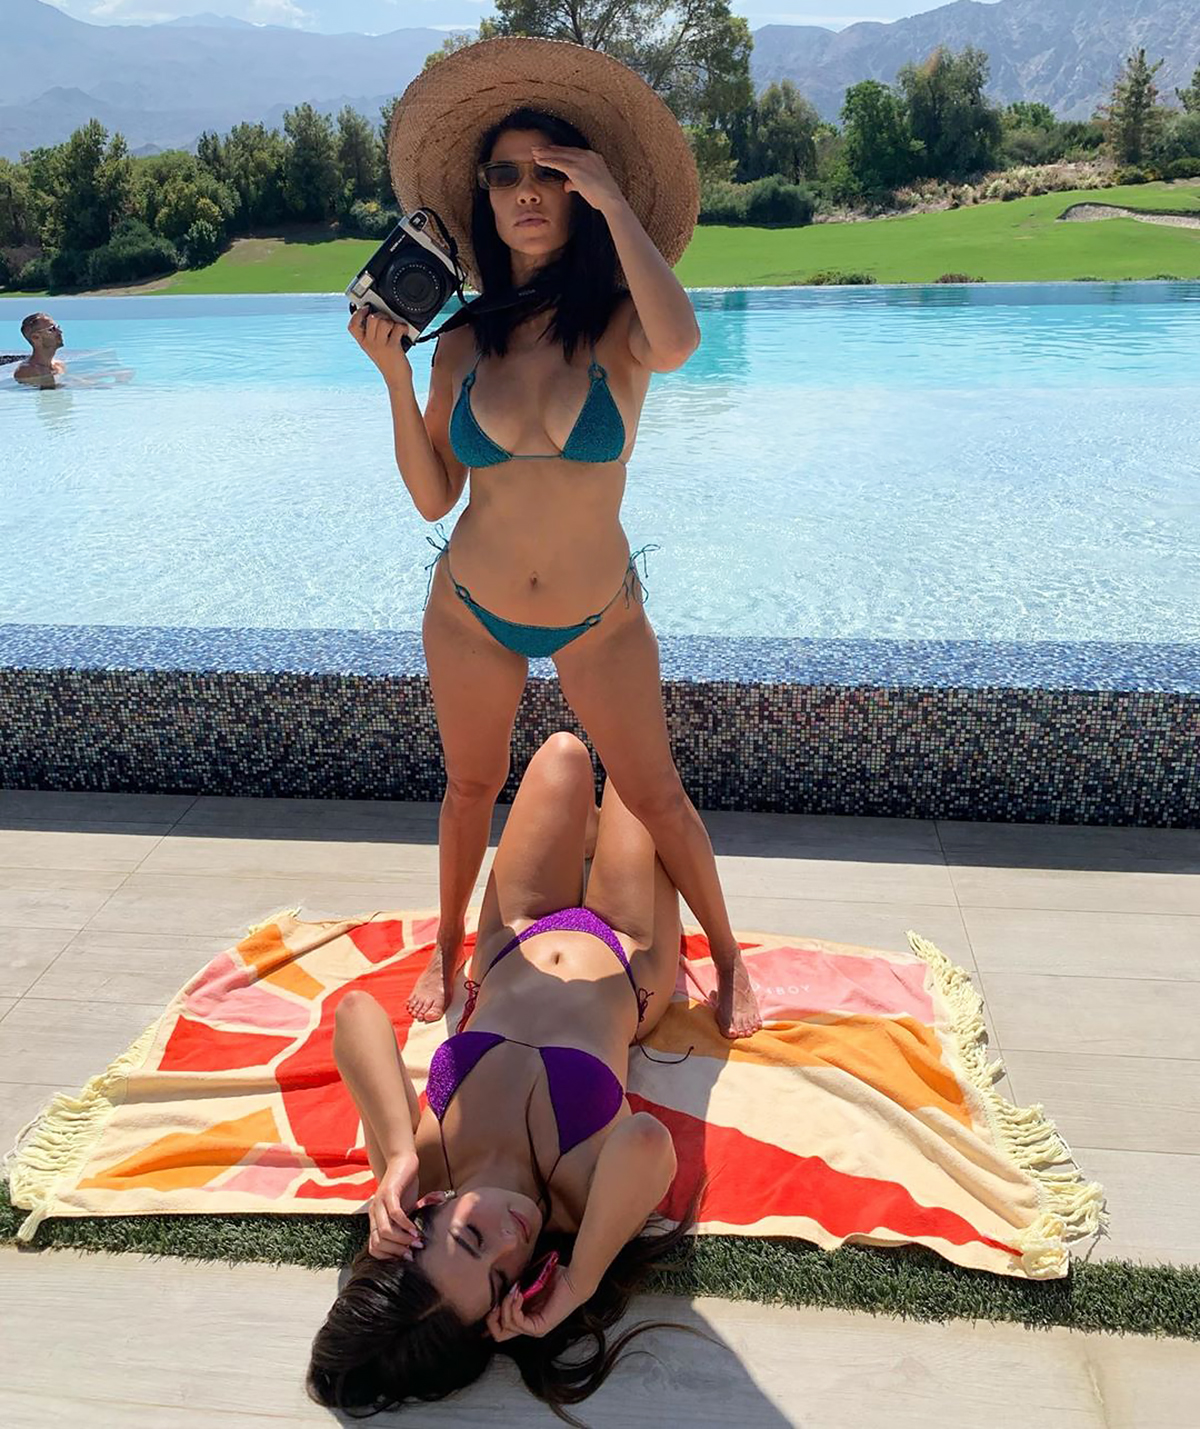 TikTok Star Addison Rae and Kourtney Kardashian Pose in Tiny String Bikinis